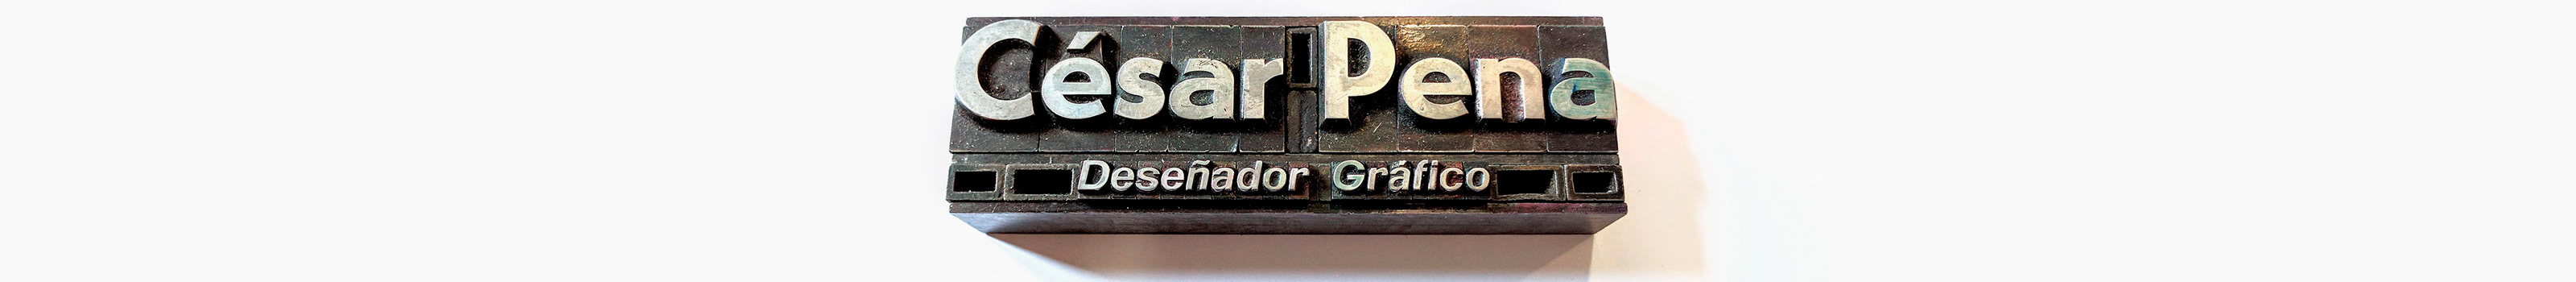 César Pena's profile banner